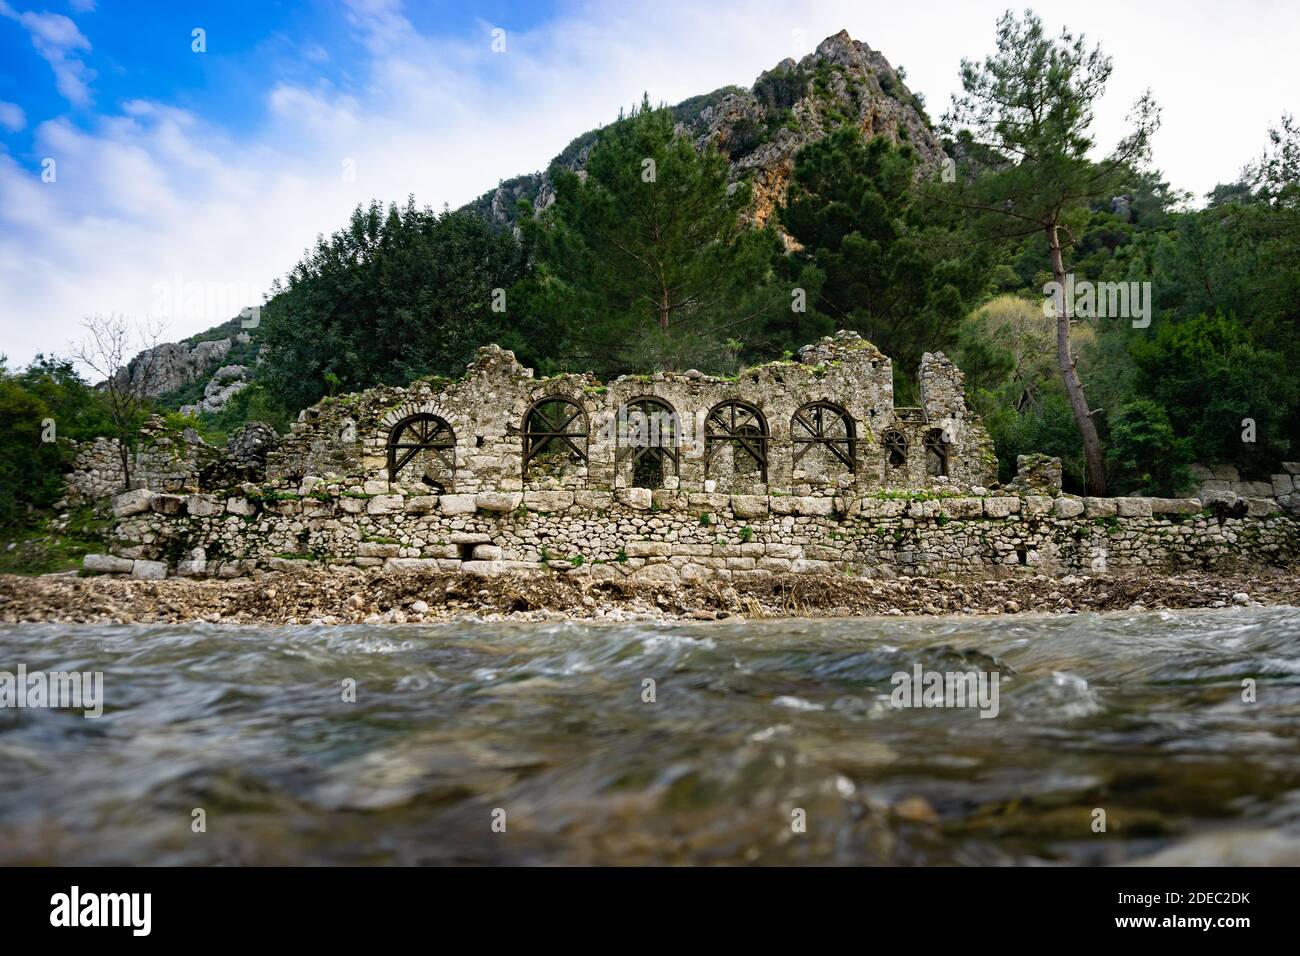 Ruines d'Olympos (Olympus) Cİty antique. Plage de Cirali. Antalya, Turquie. Voyage et tourisme. Banque D'Images